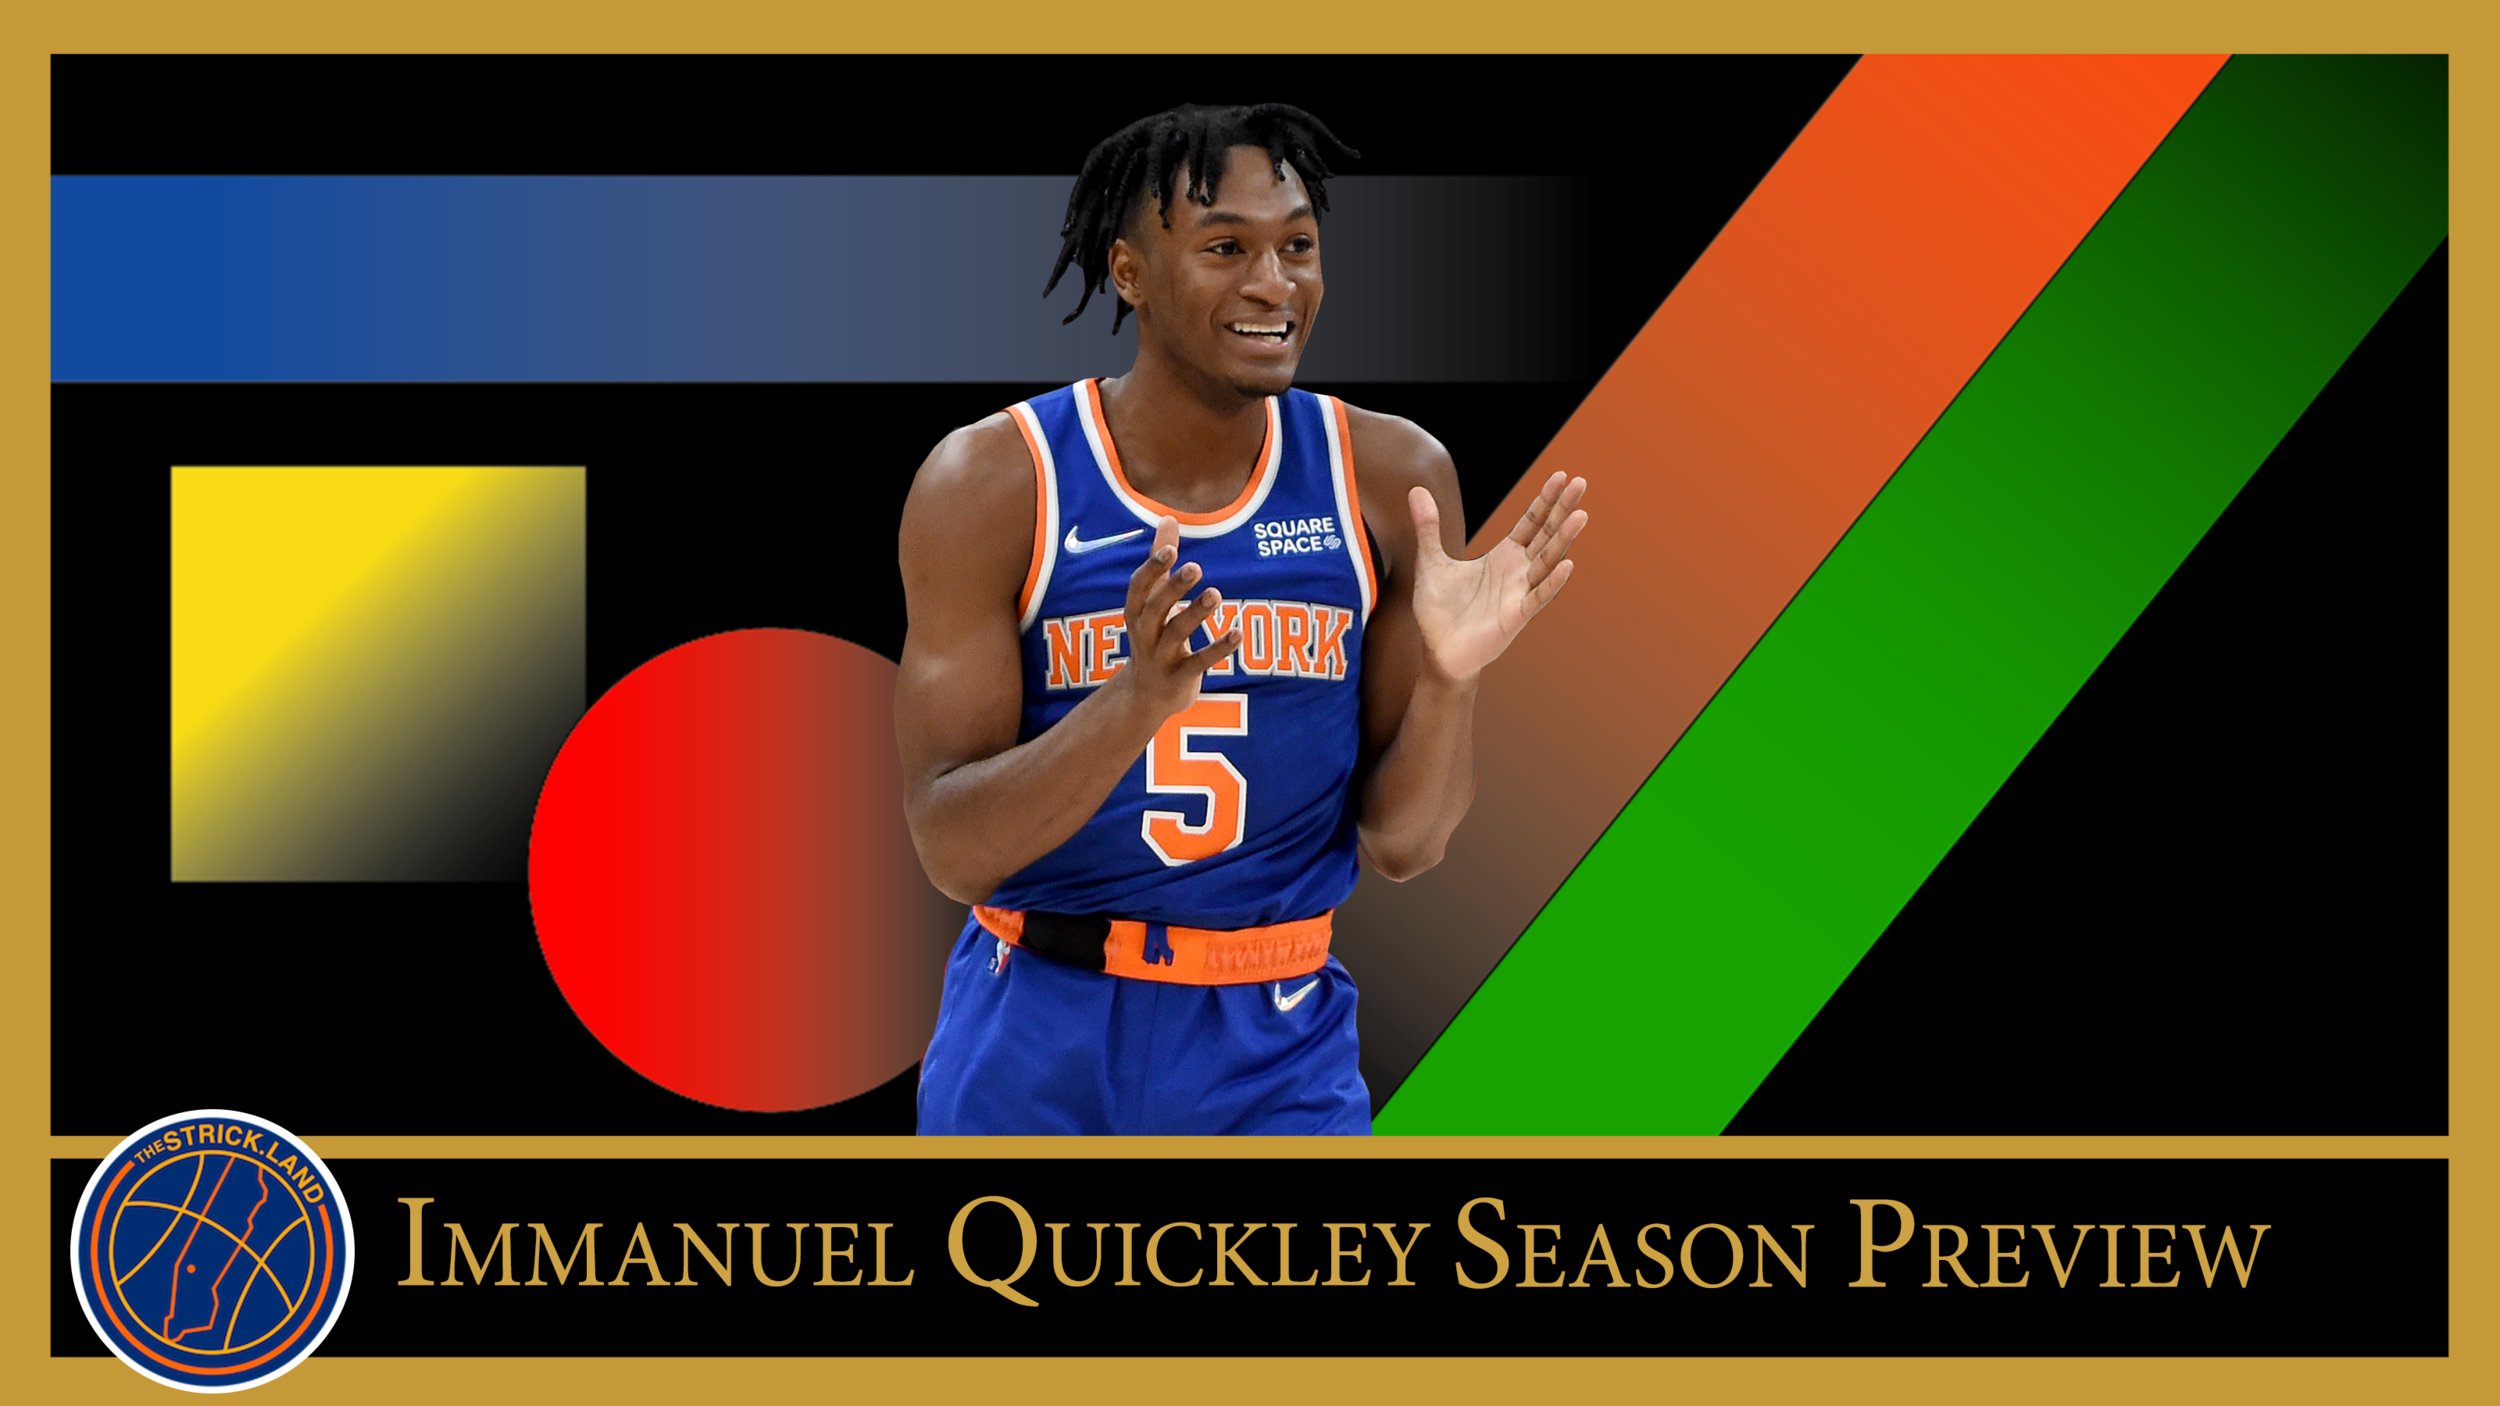 Kentucky basketball: Immanuel Quickley to enter NBA draft